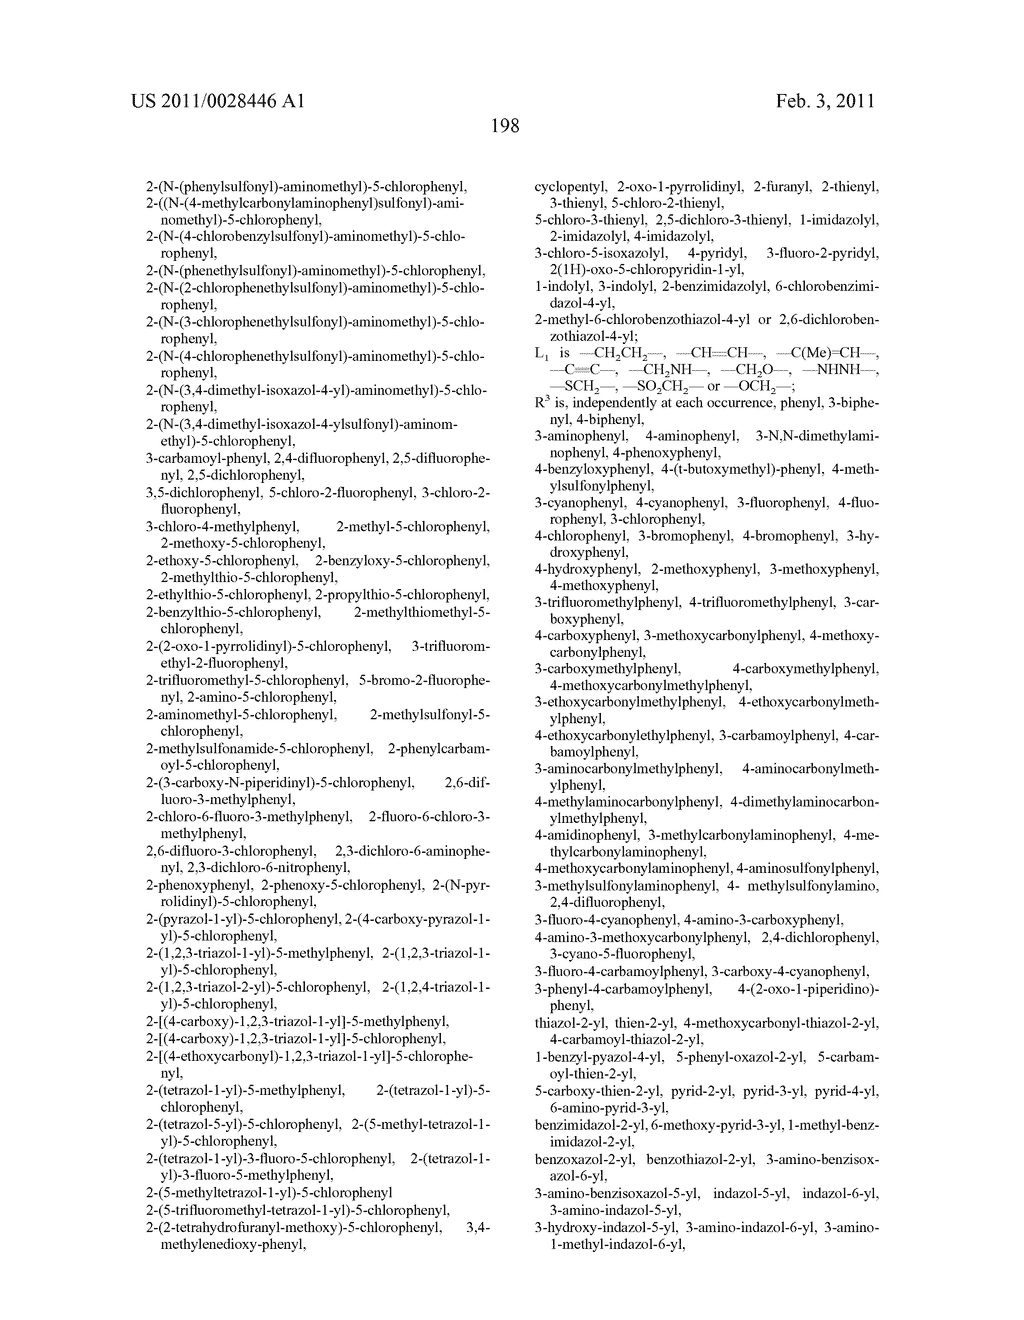 ARYLPROPIONAMIDE, ARYLACRYLAMIDE, ARYLPROPYNAMIDE, OR ARYLMETHYLUREA ANALOGS AS FACTOR XIA INHIBITORS - diagram, schematic, and image 199